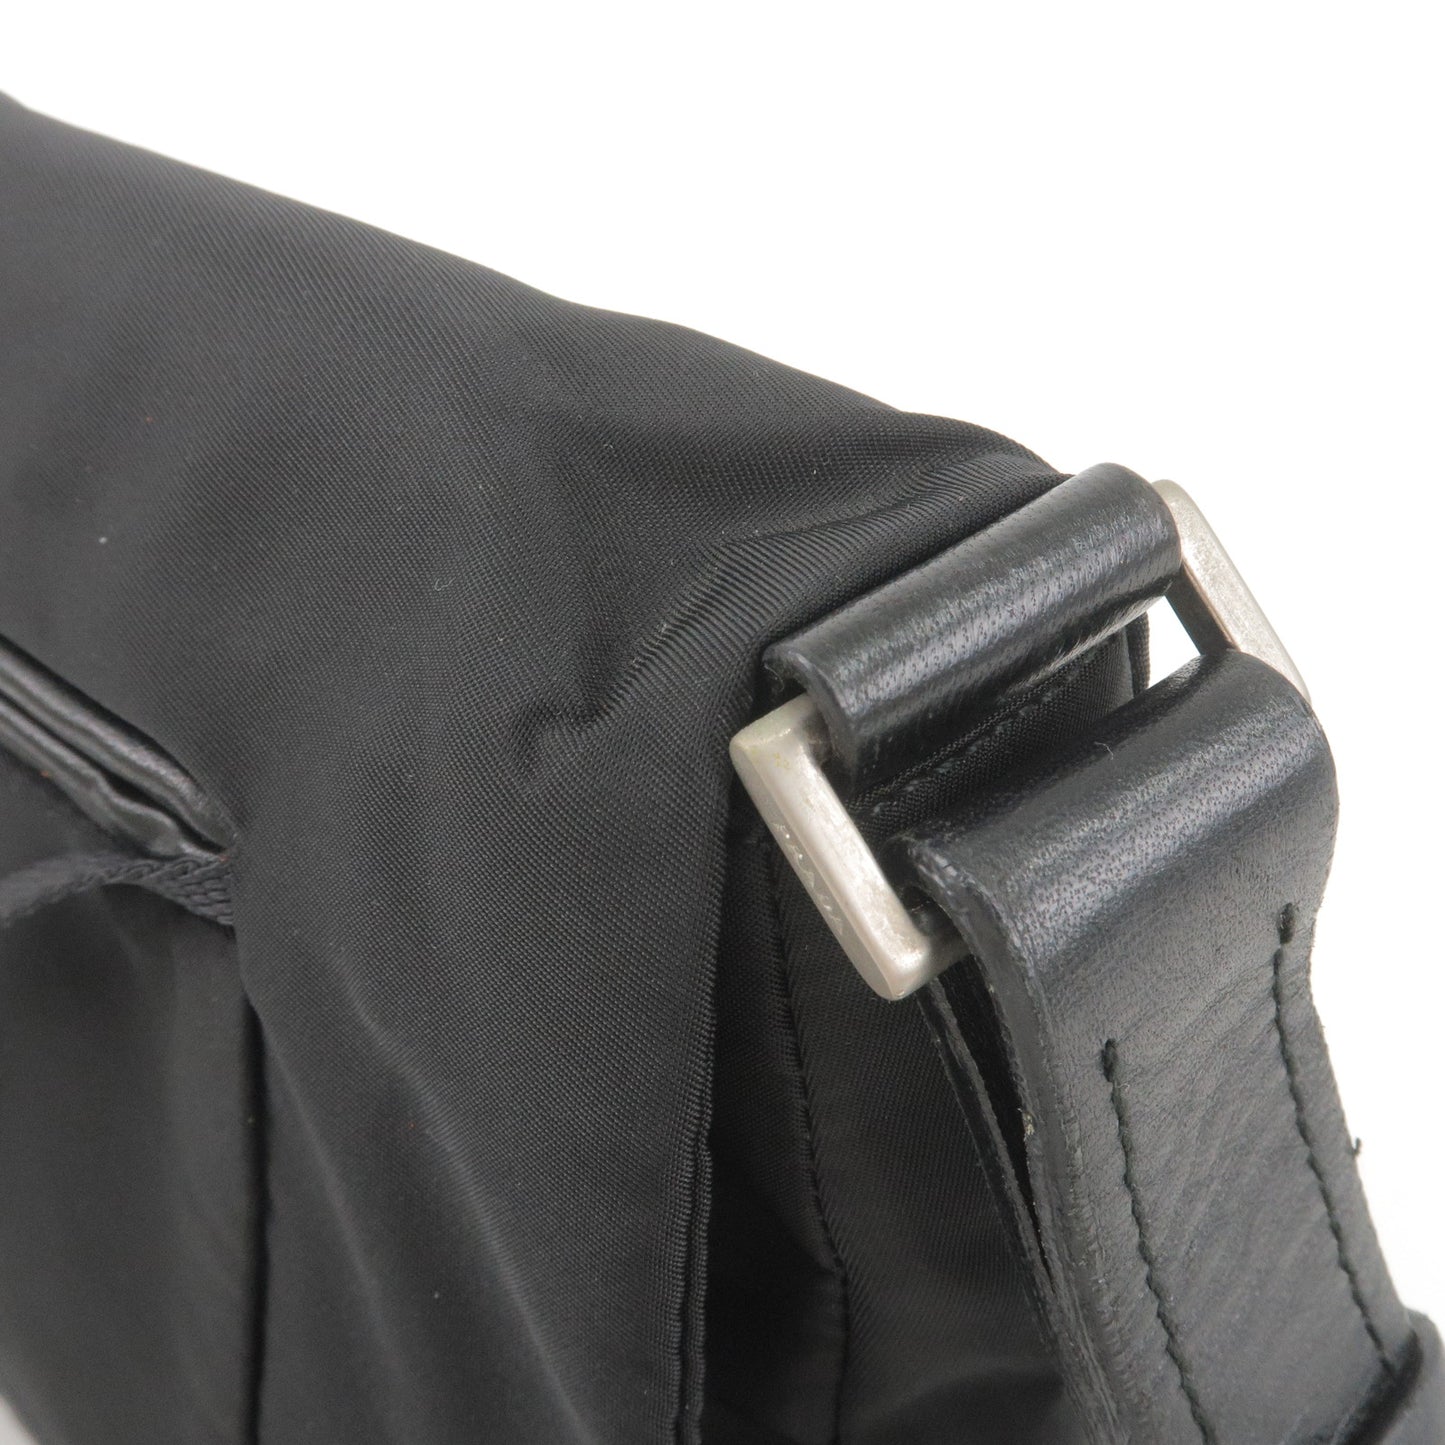 PRADA Logo Nylon Leather Shoulder Bag NERO Black B9717